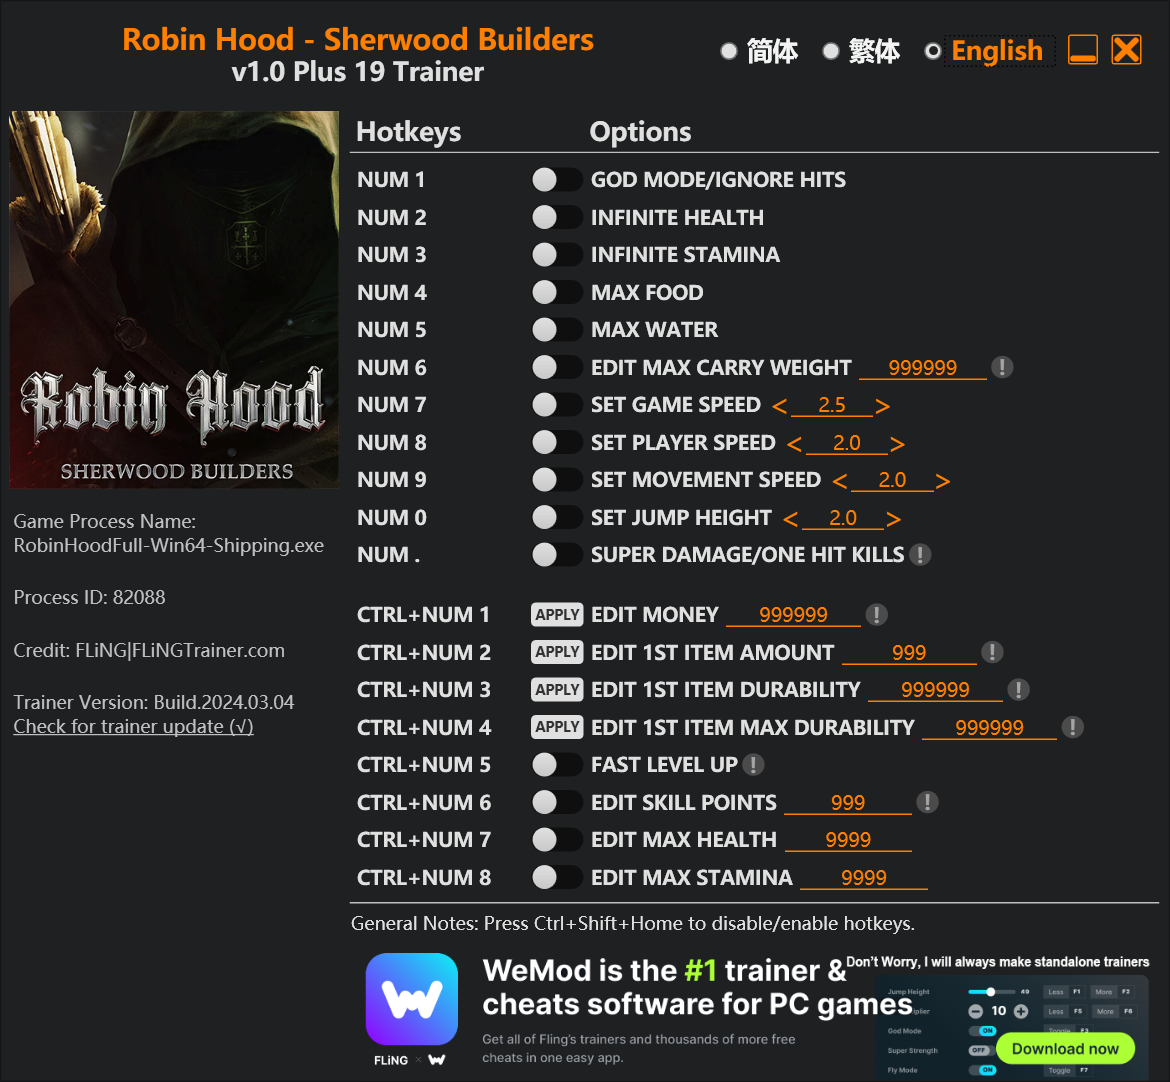 Robin Hood - Sherwood Builders Trainer/Cheat